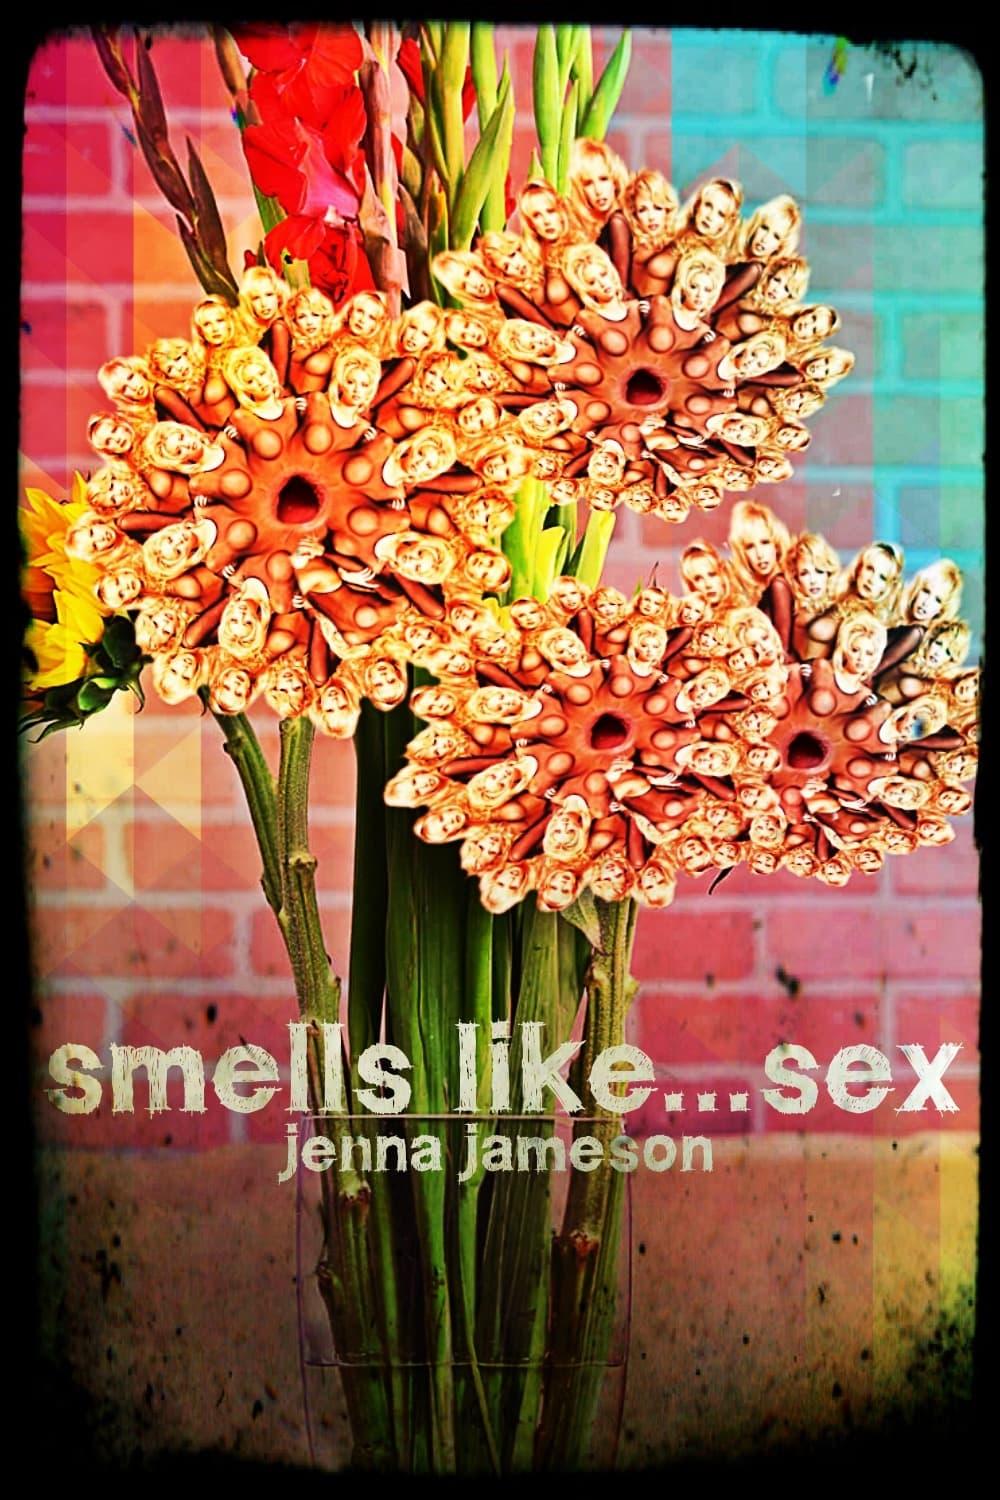 Smells Like... Sex poster